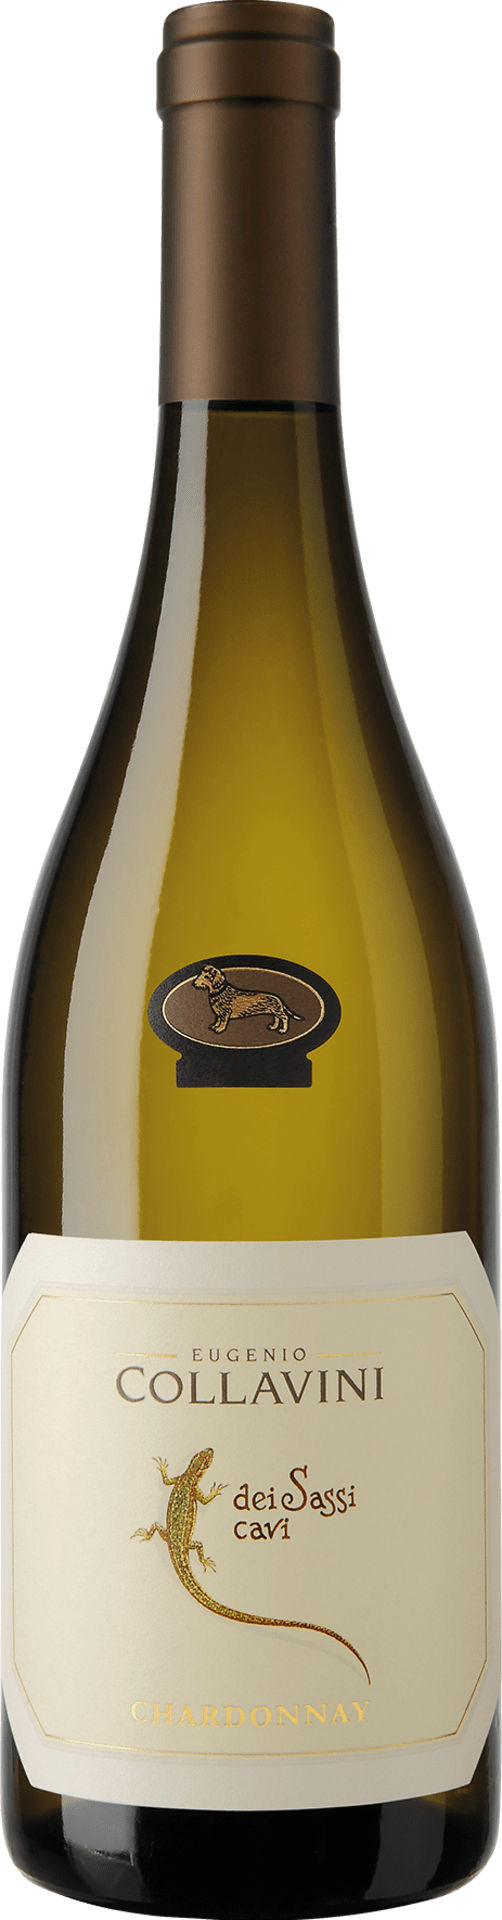 Dei Sassi Cavi Chardonnay IGT